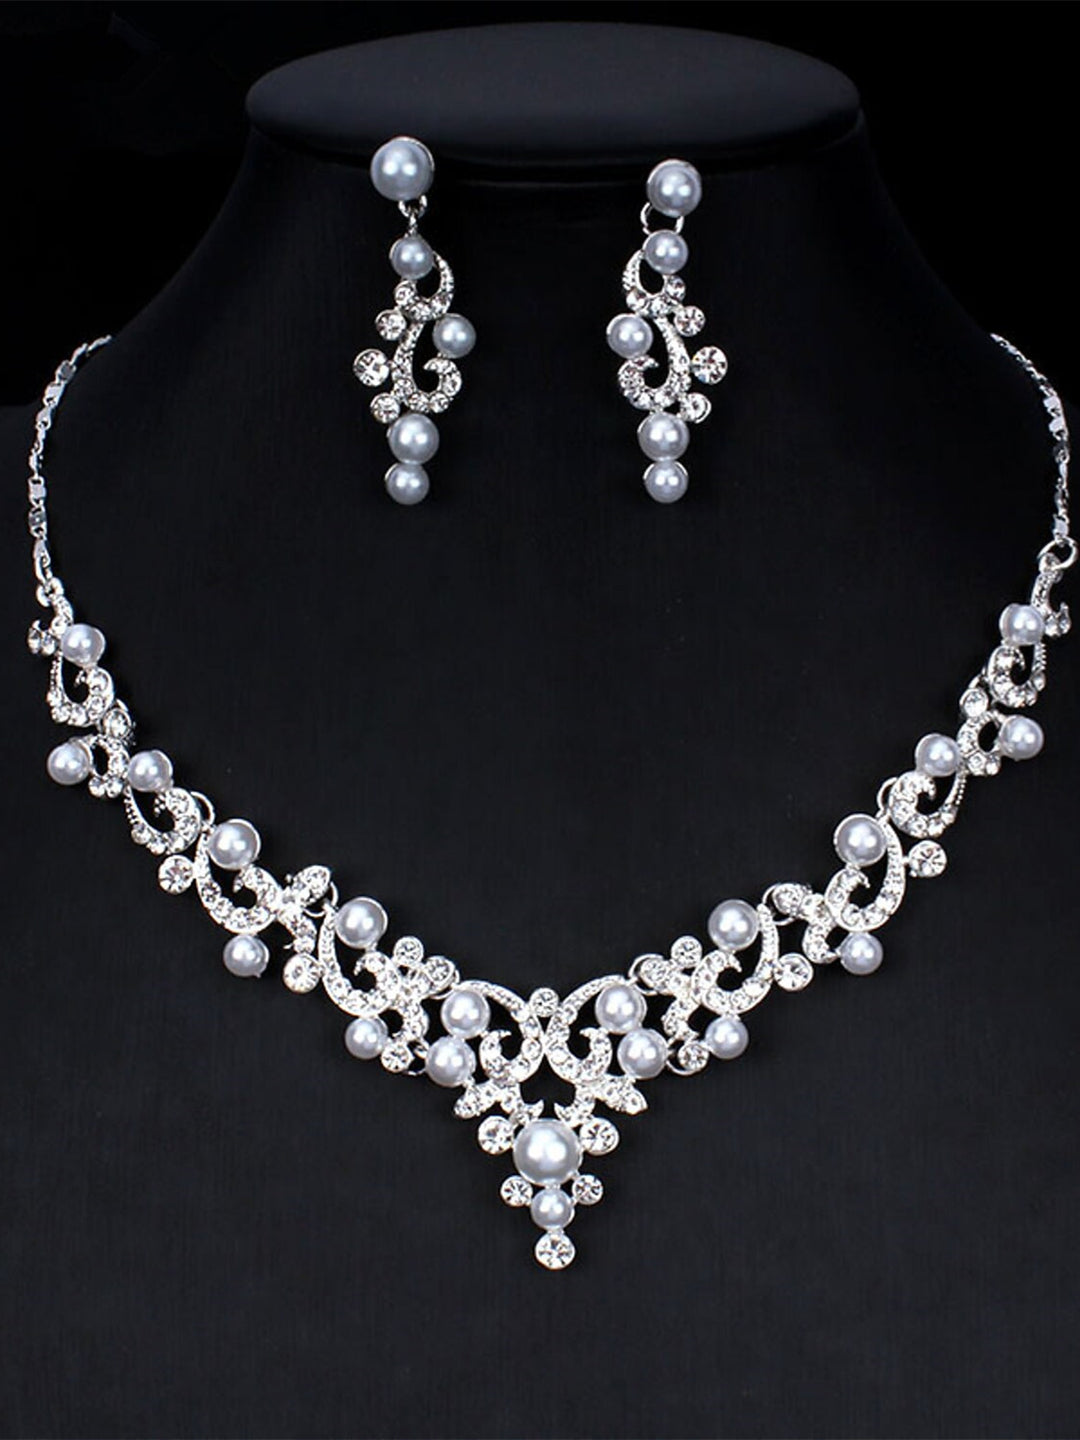 1 set Pearl Rhinestone Jewelry Earrings Necklace For Women's Wedding Pendant Necklace Set